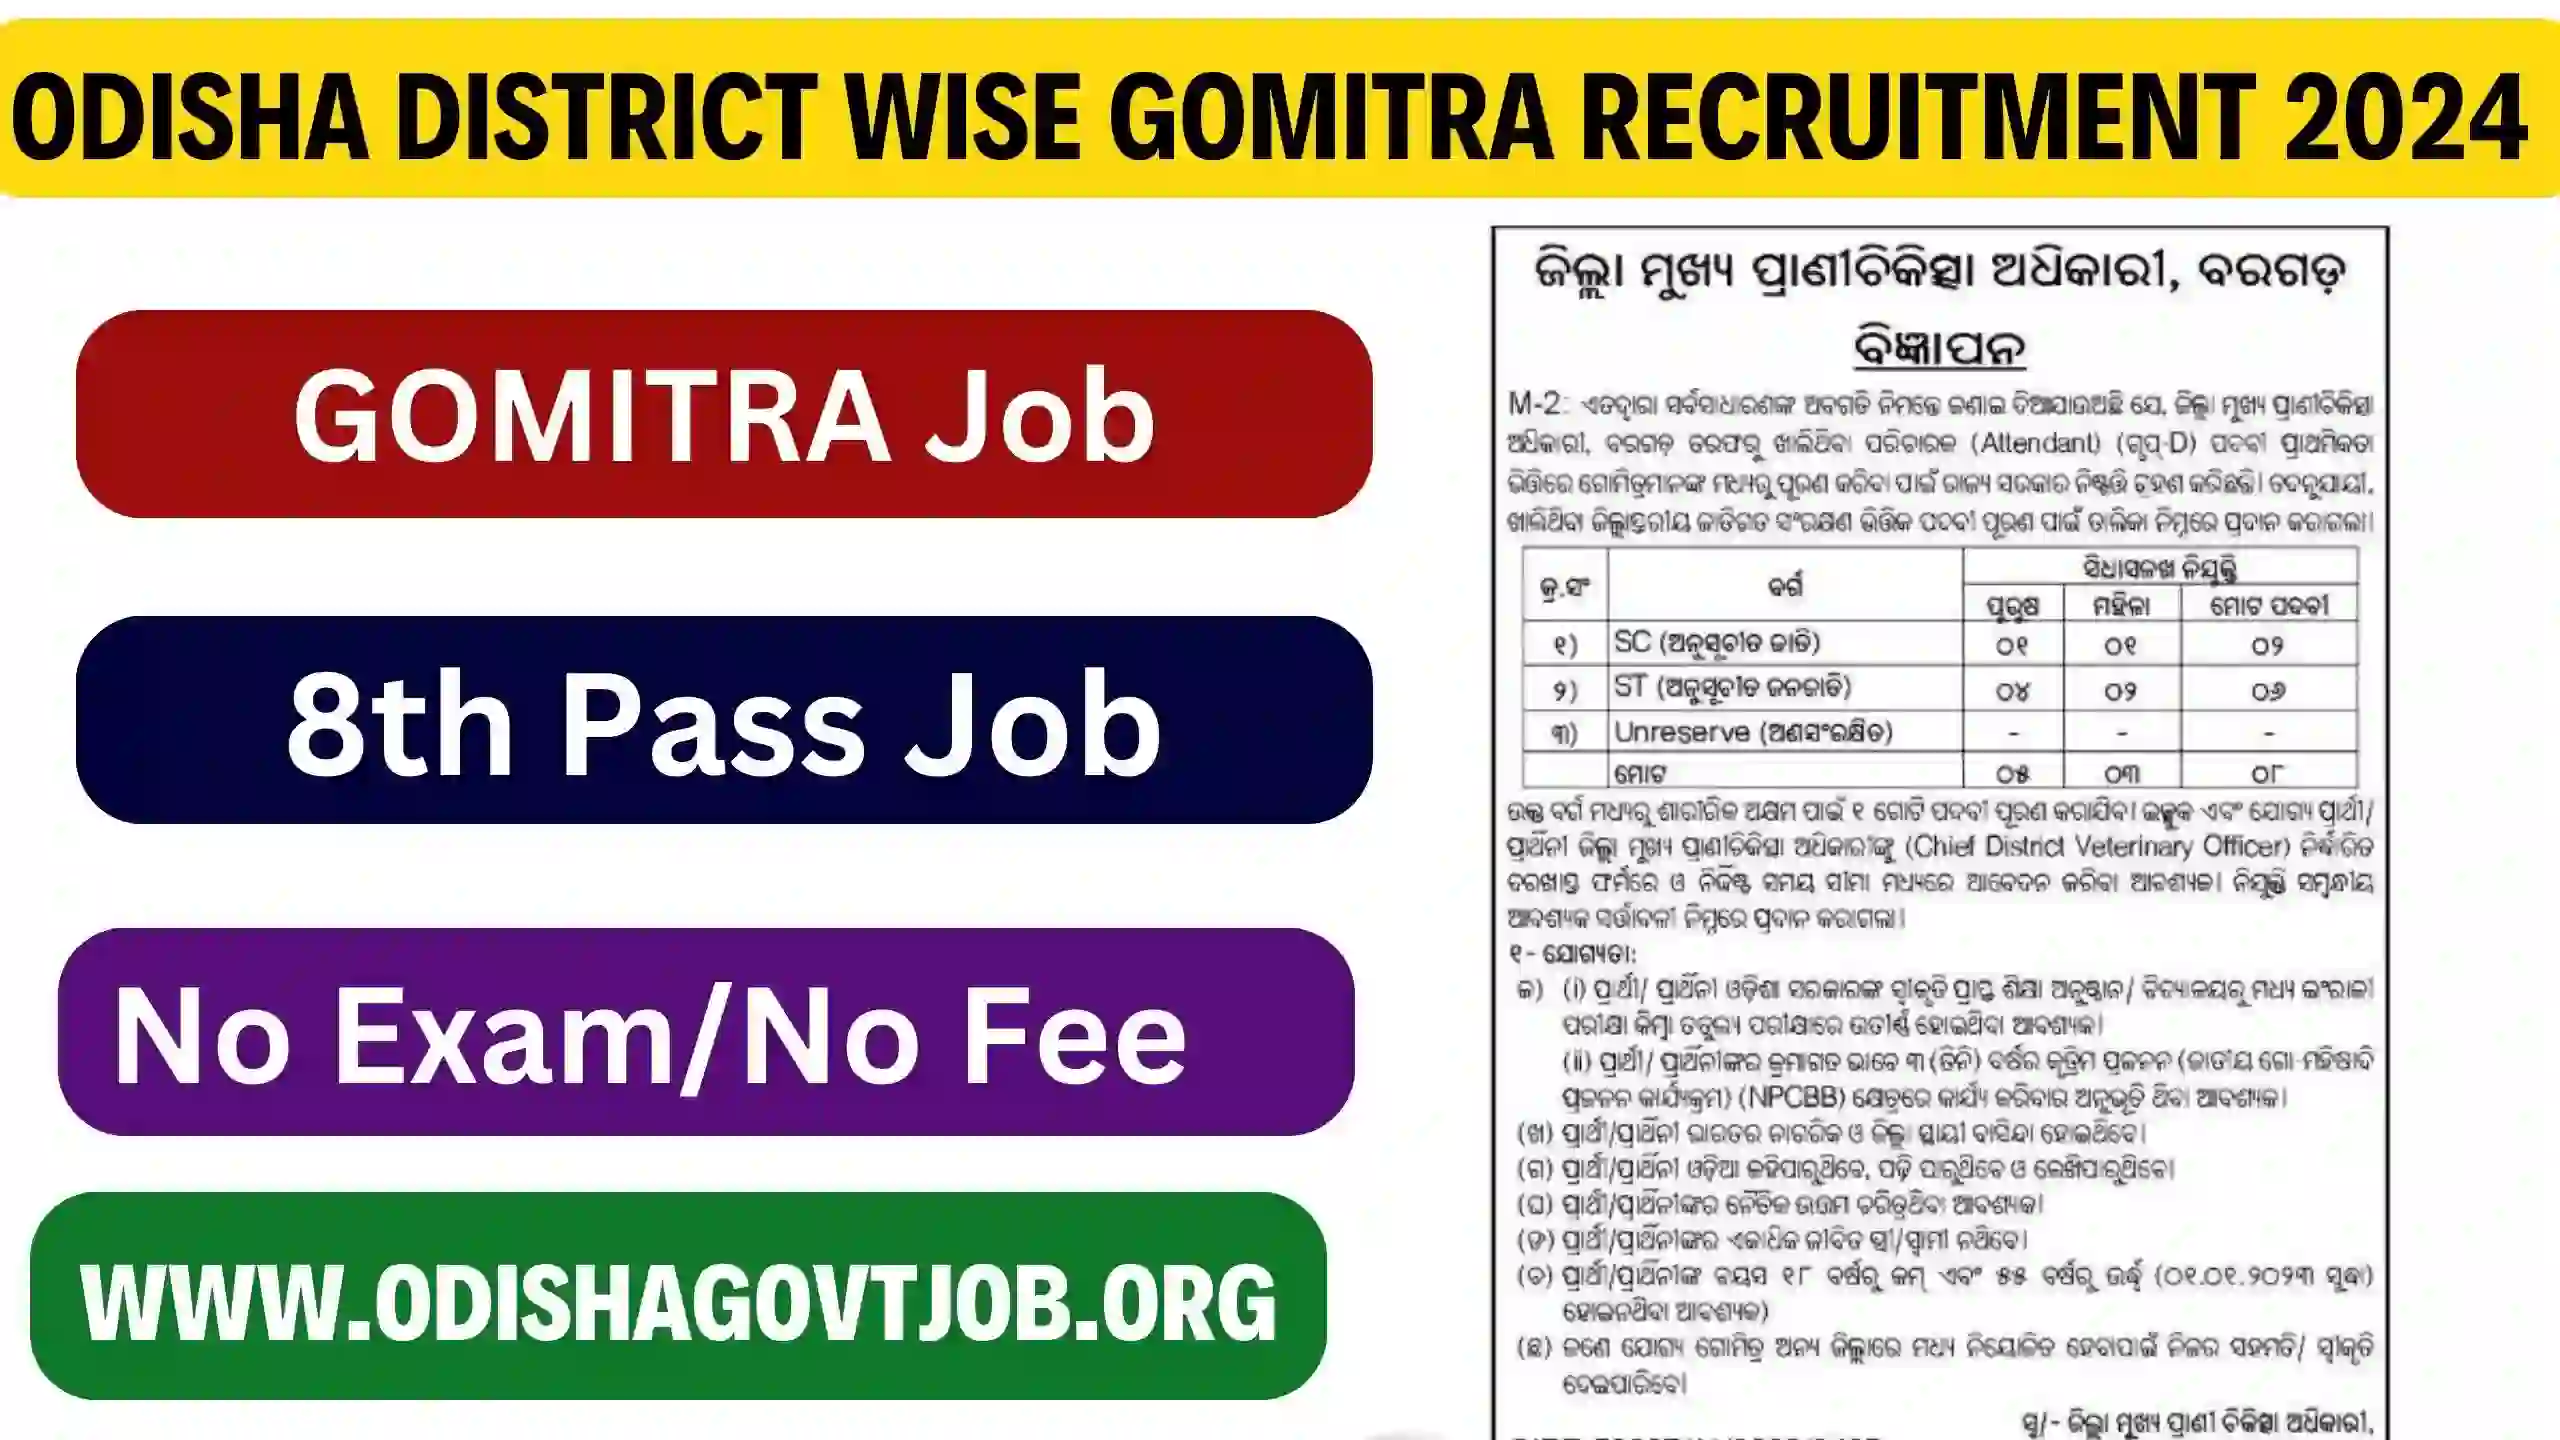 Odisha District Wise Gomitra Recruitment 2024